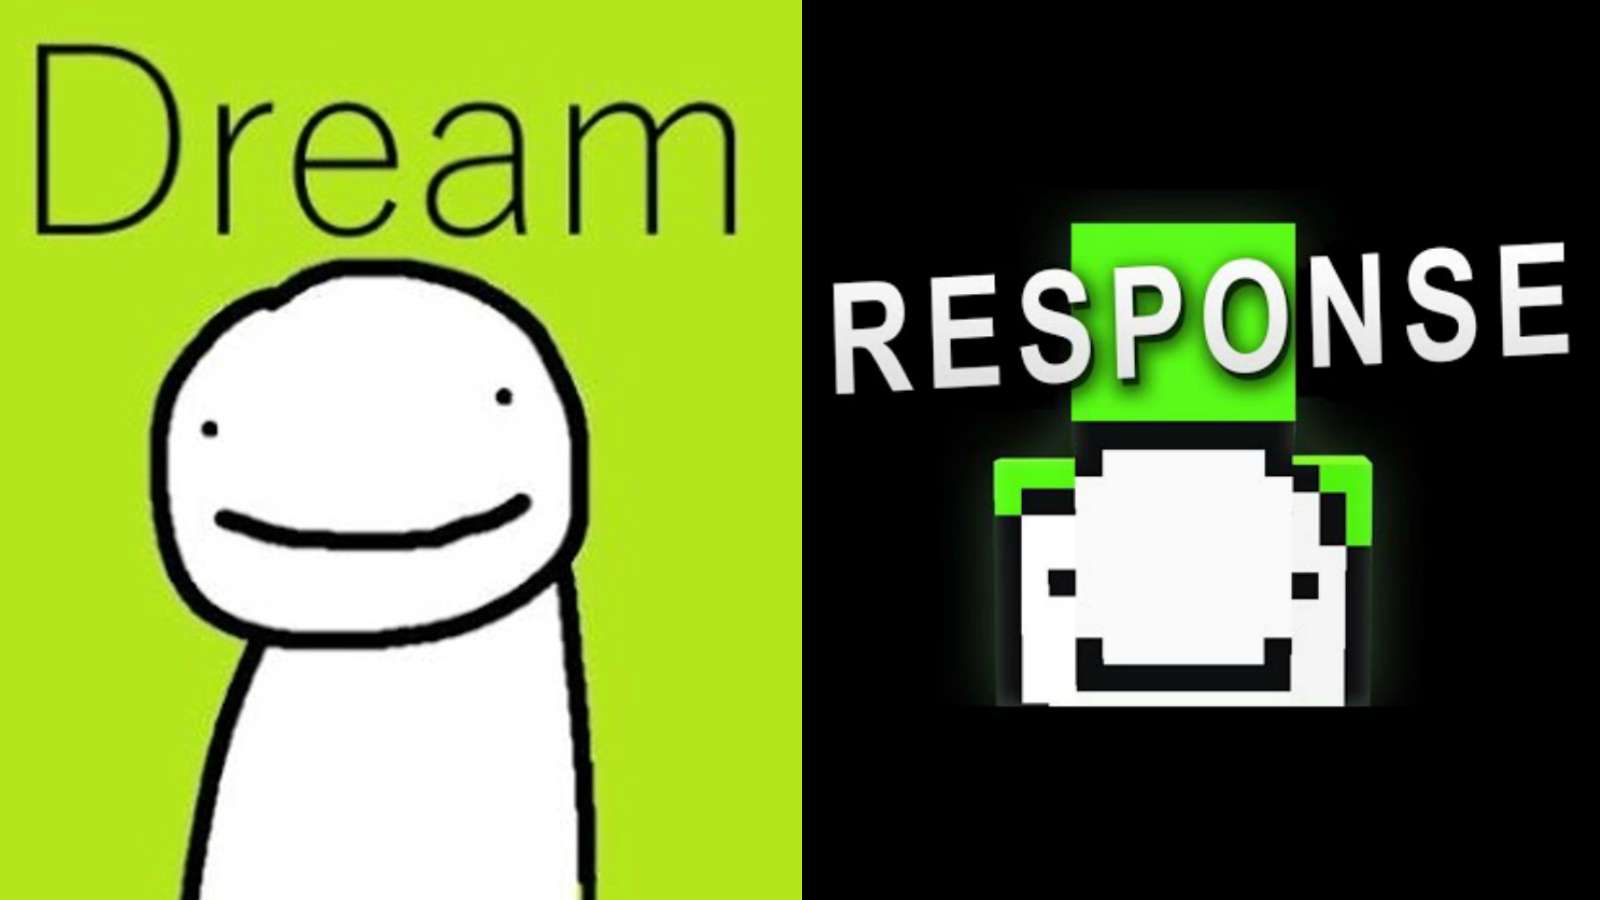 Dream's response video on YouTube